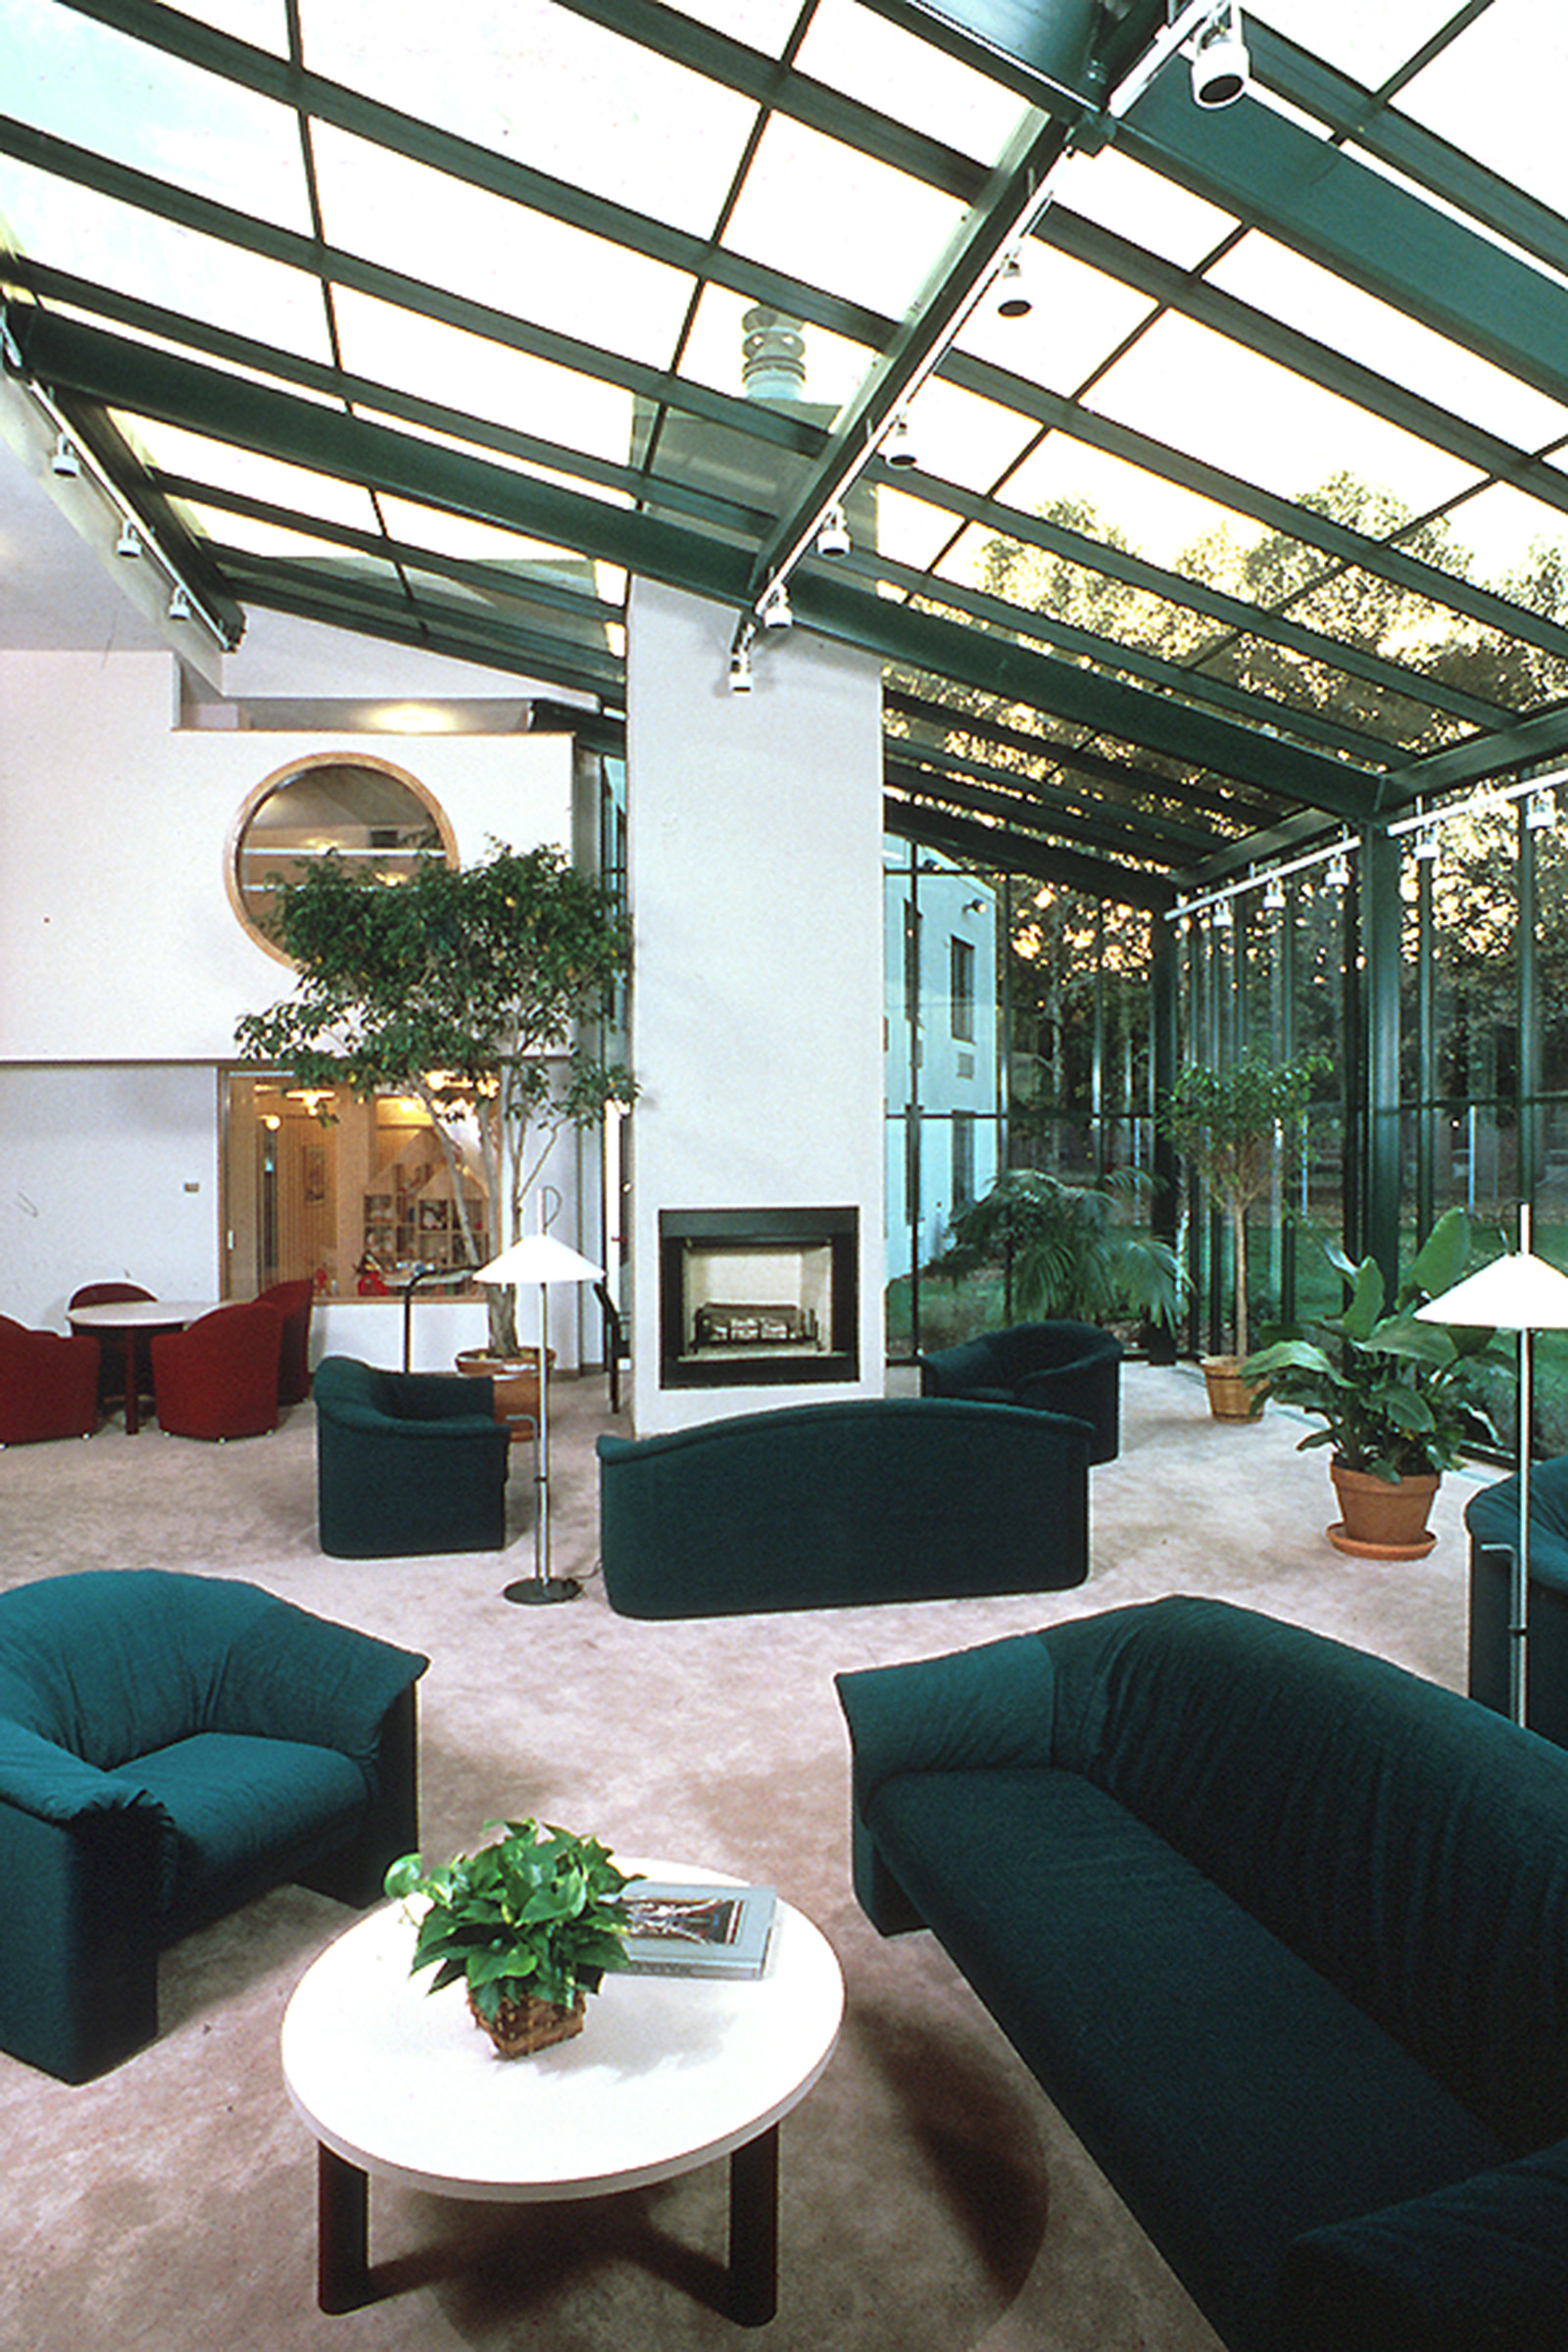 Interior View 1 - Greenhouse.jpg